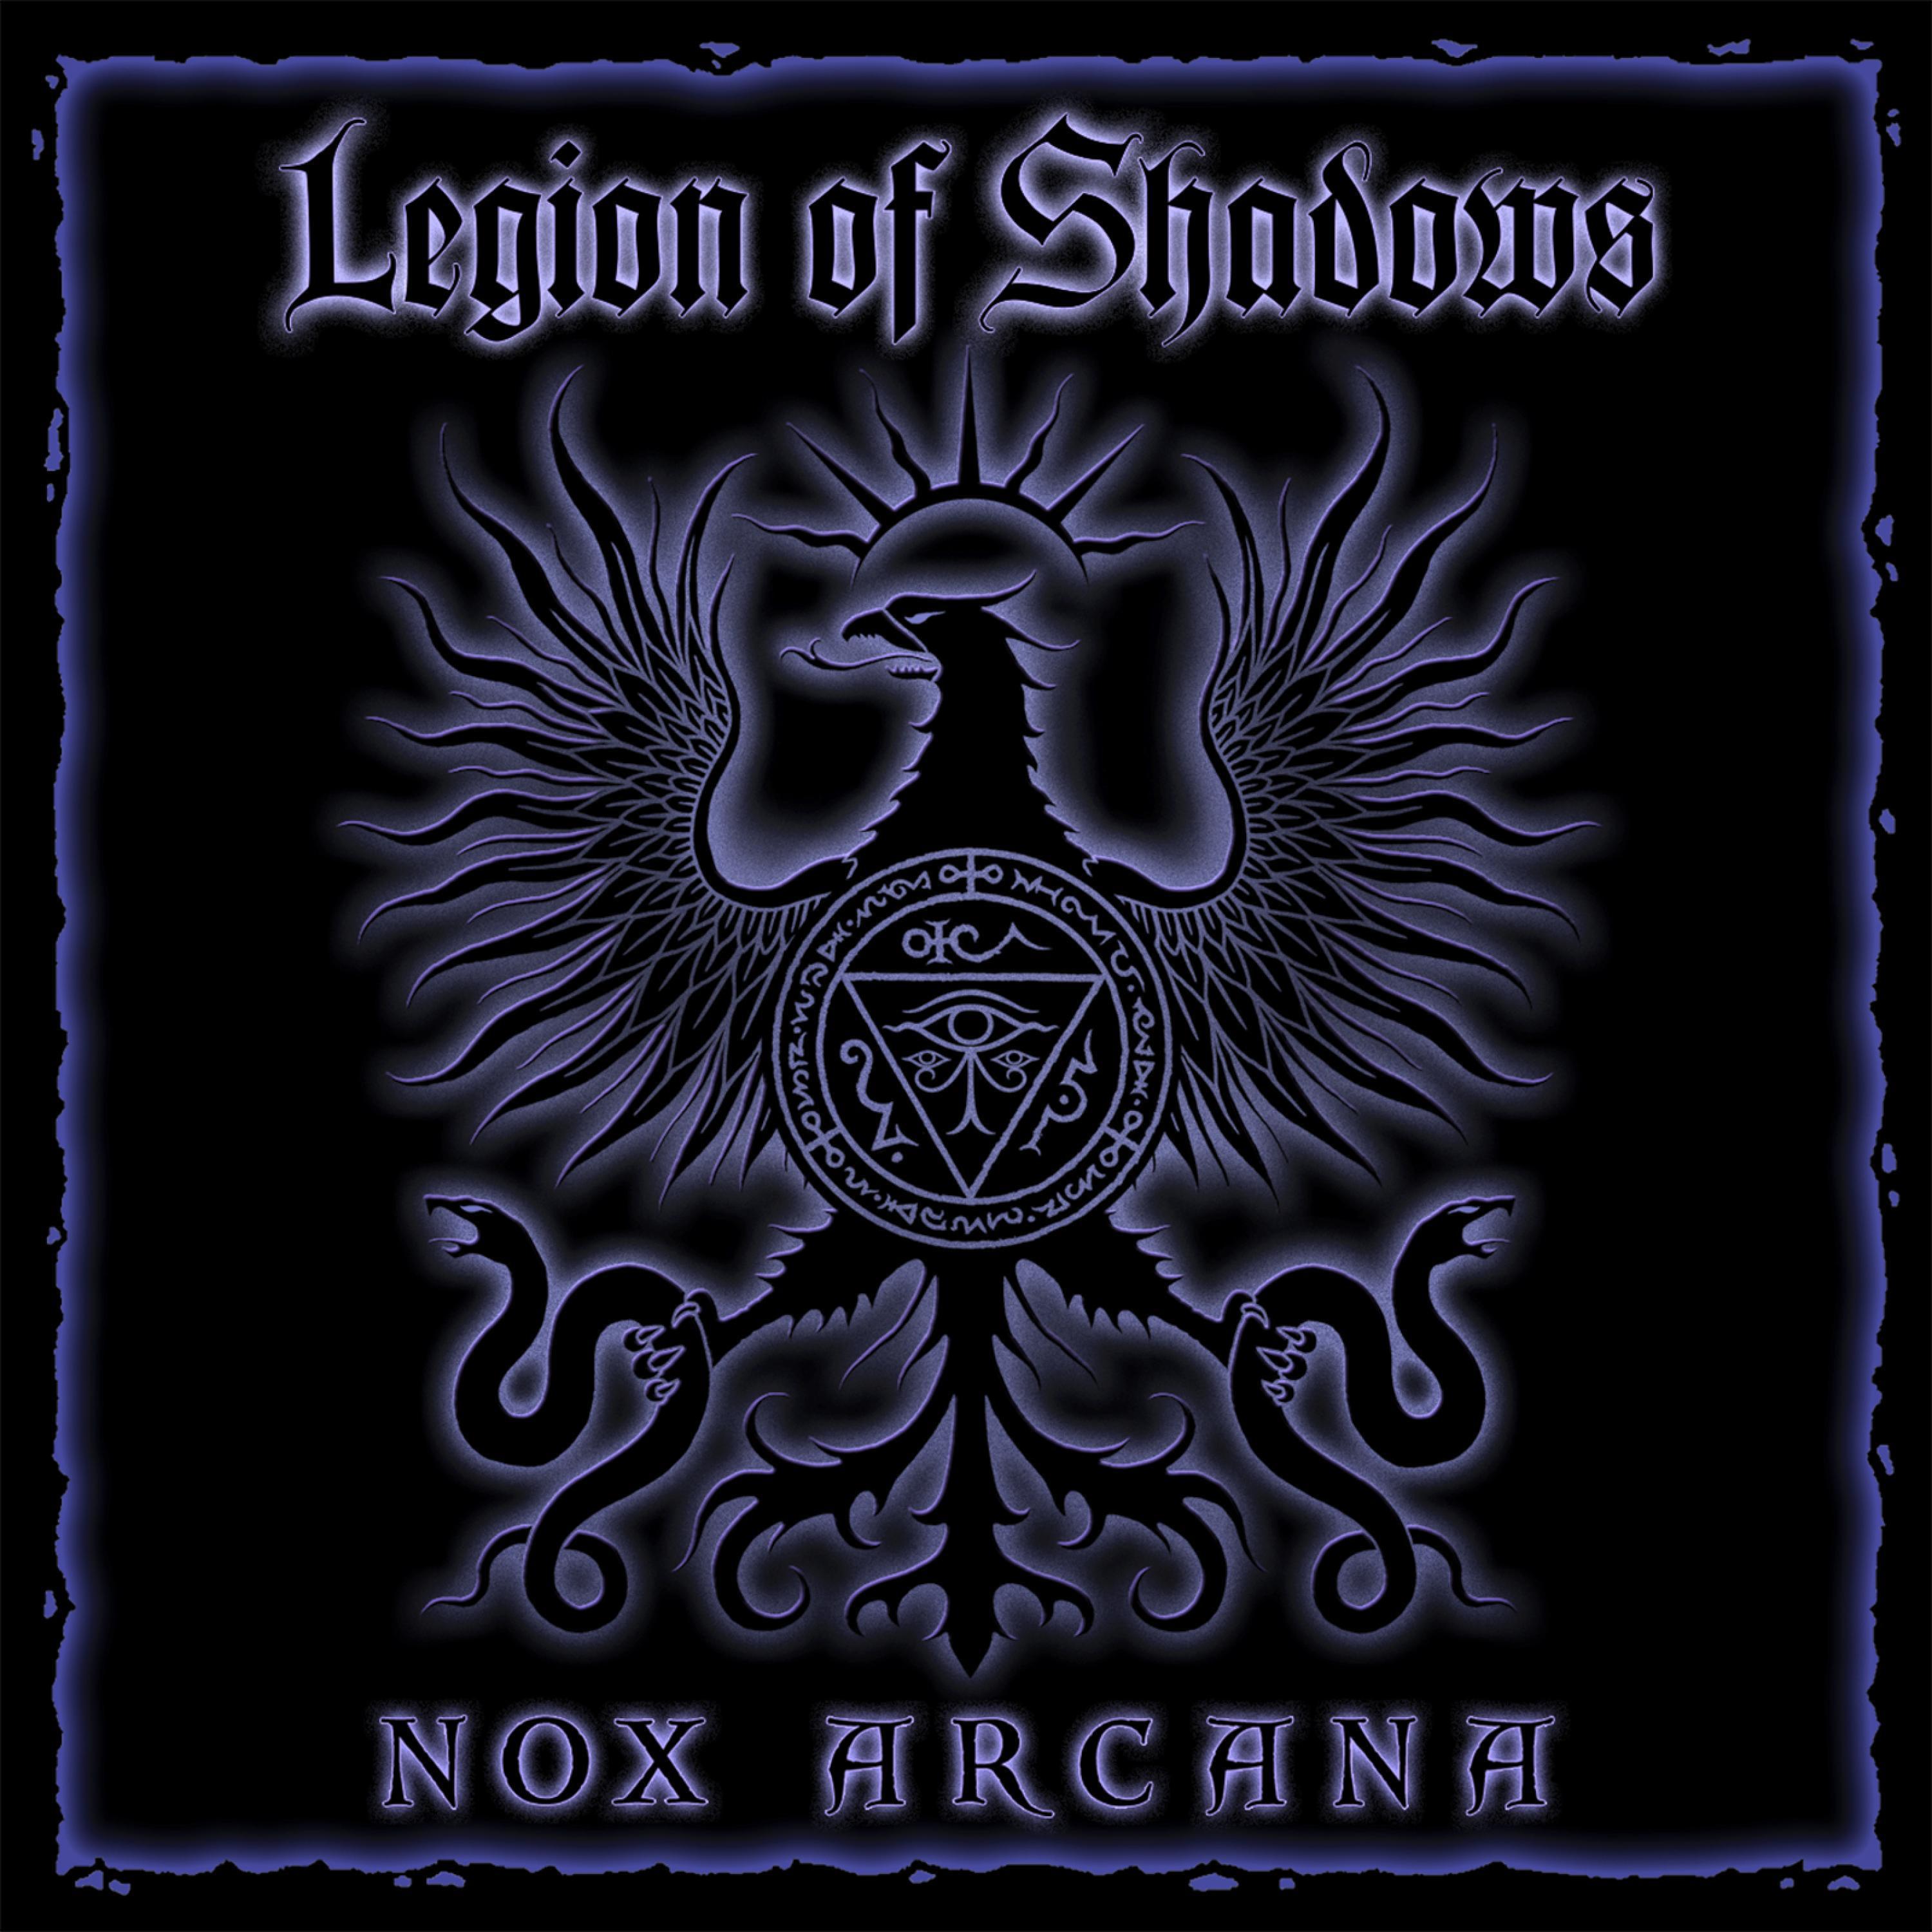 Nox Arcana - Legion of Shadows